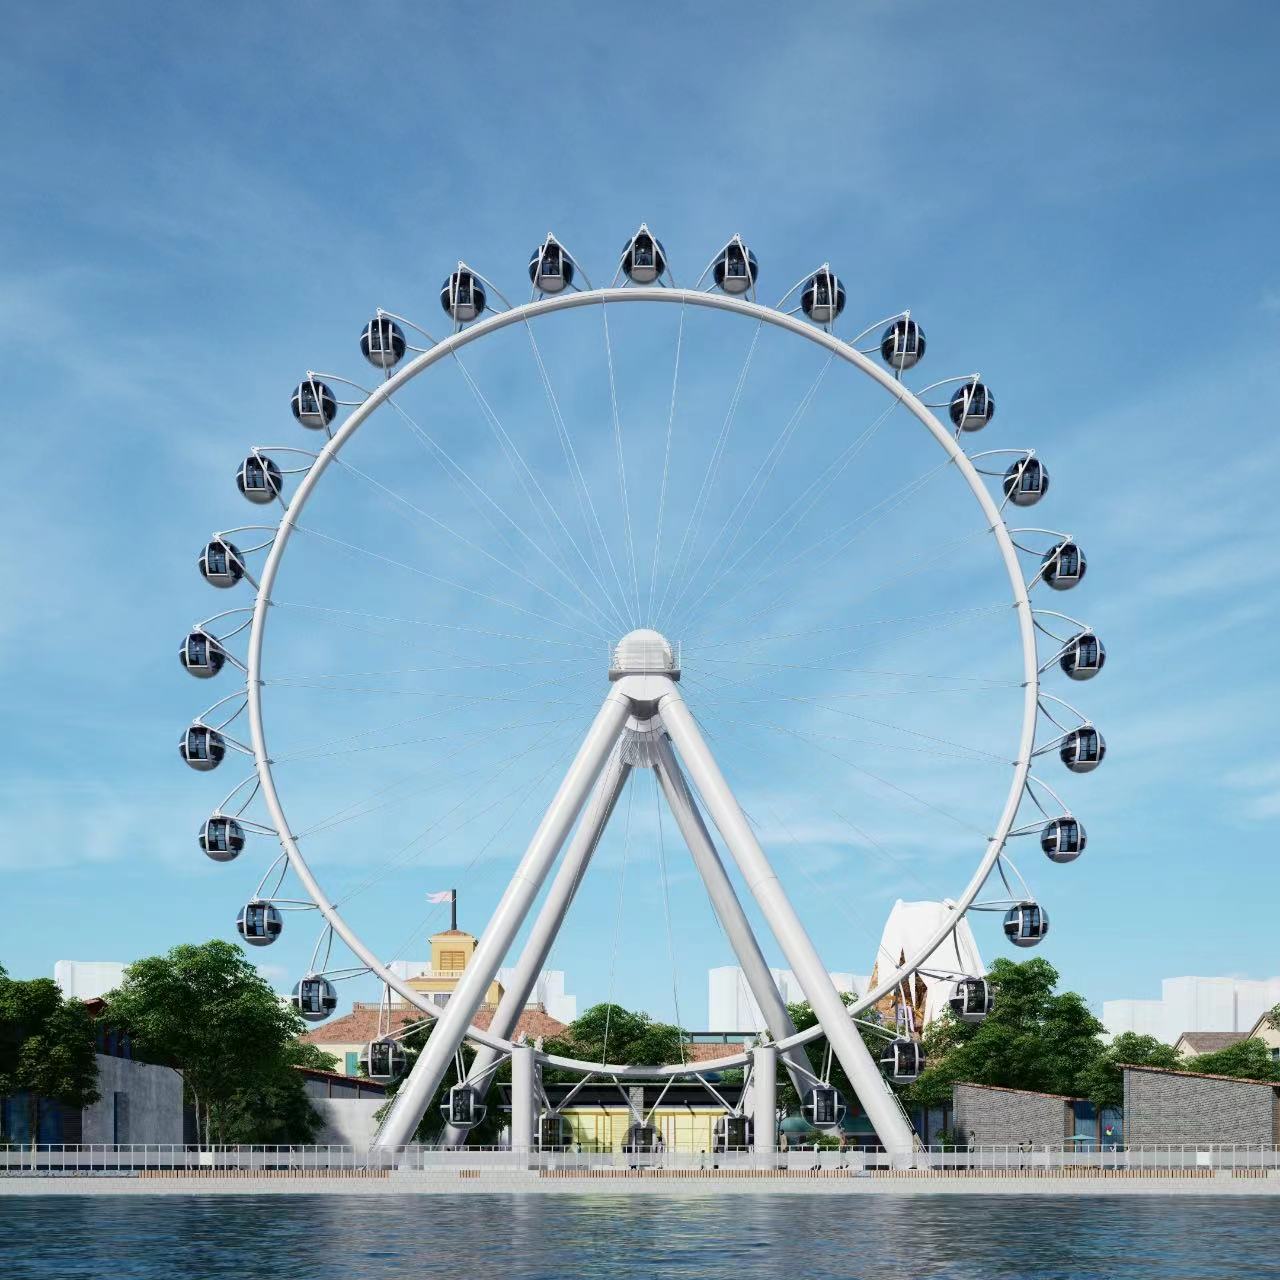 Amusement Park Ferris Wheel GLC-52C